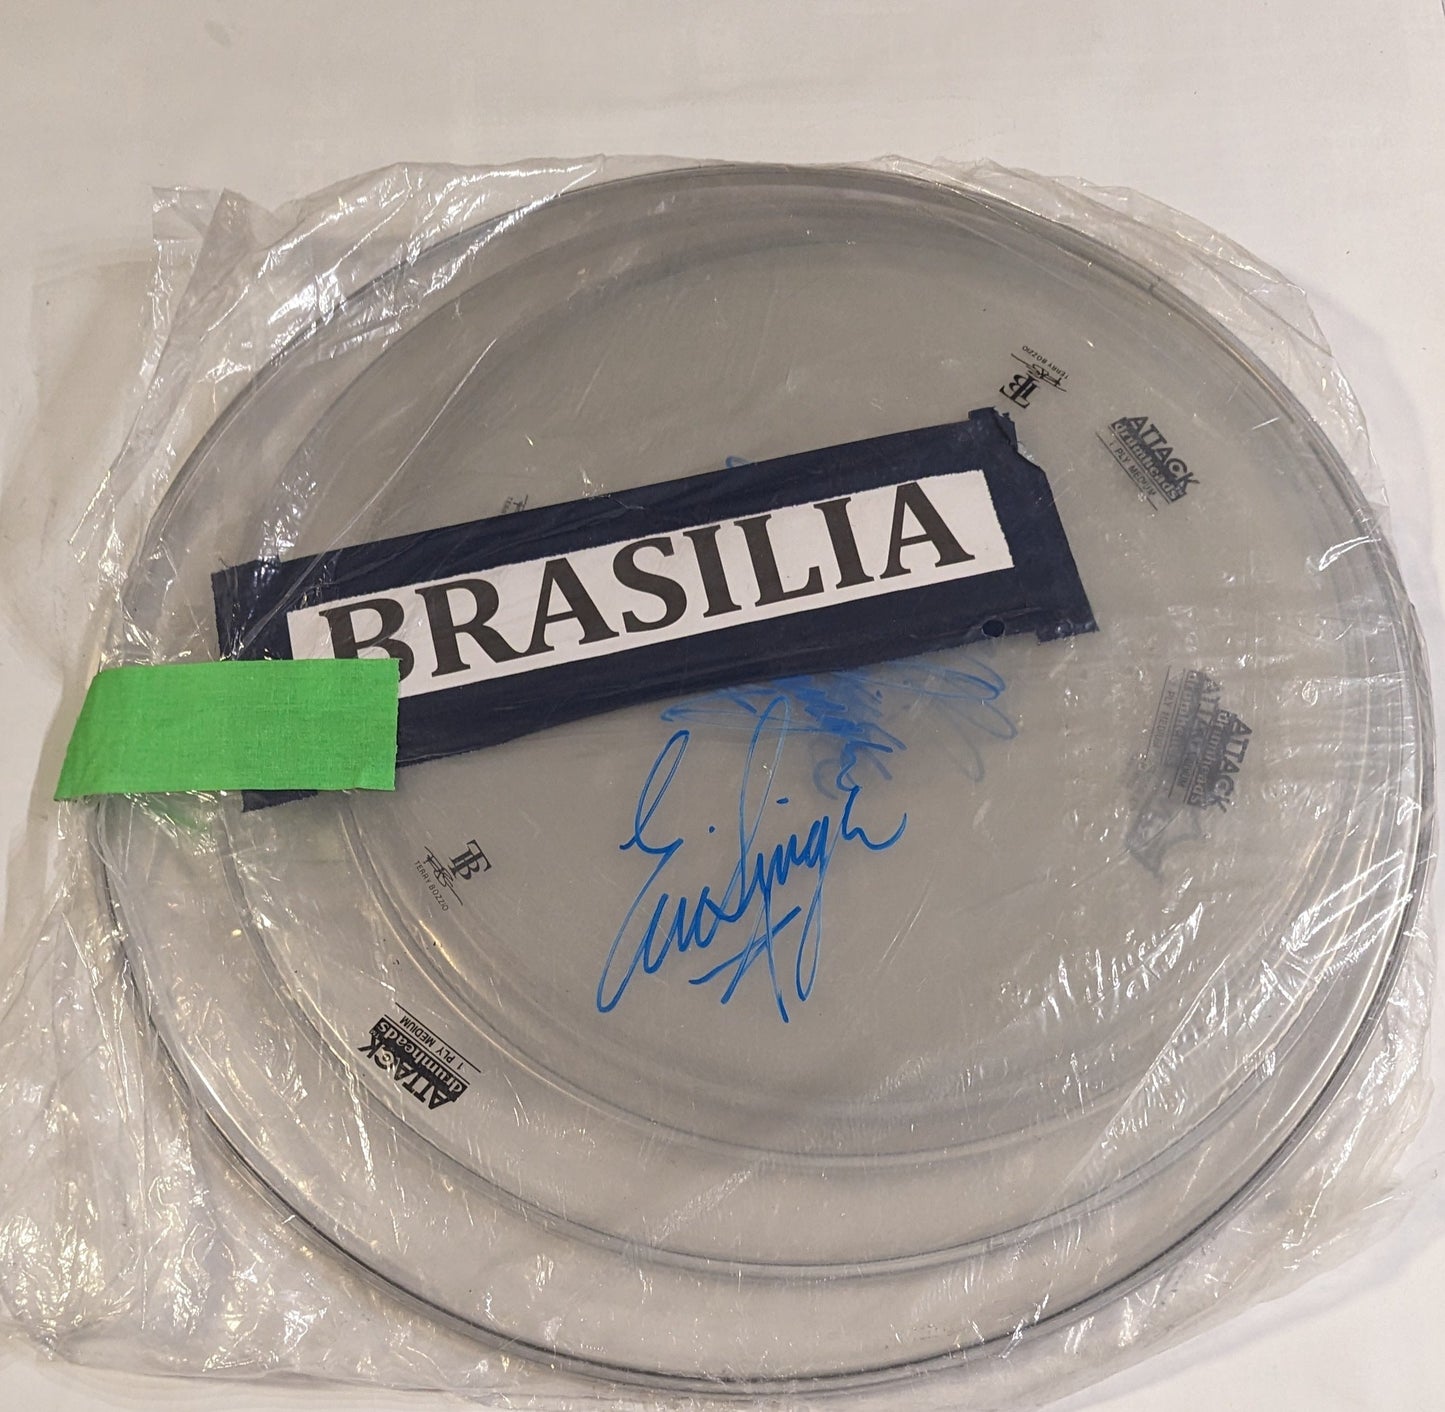 BRASILIA BRAZIL 4-24-2015 ERIC SINGER Signed Stage-Used Drumhead Complete set of 8